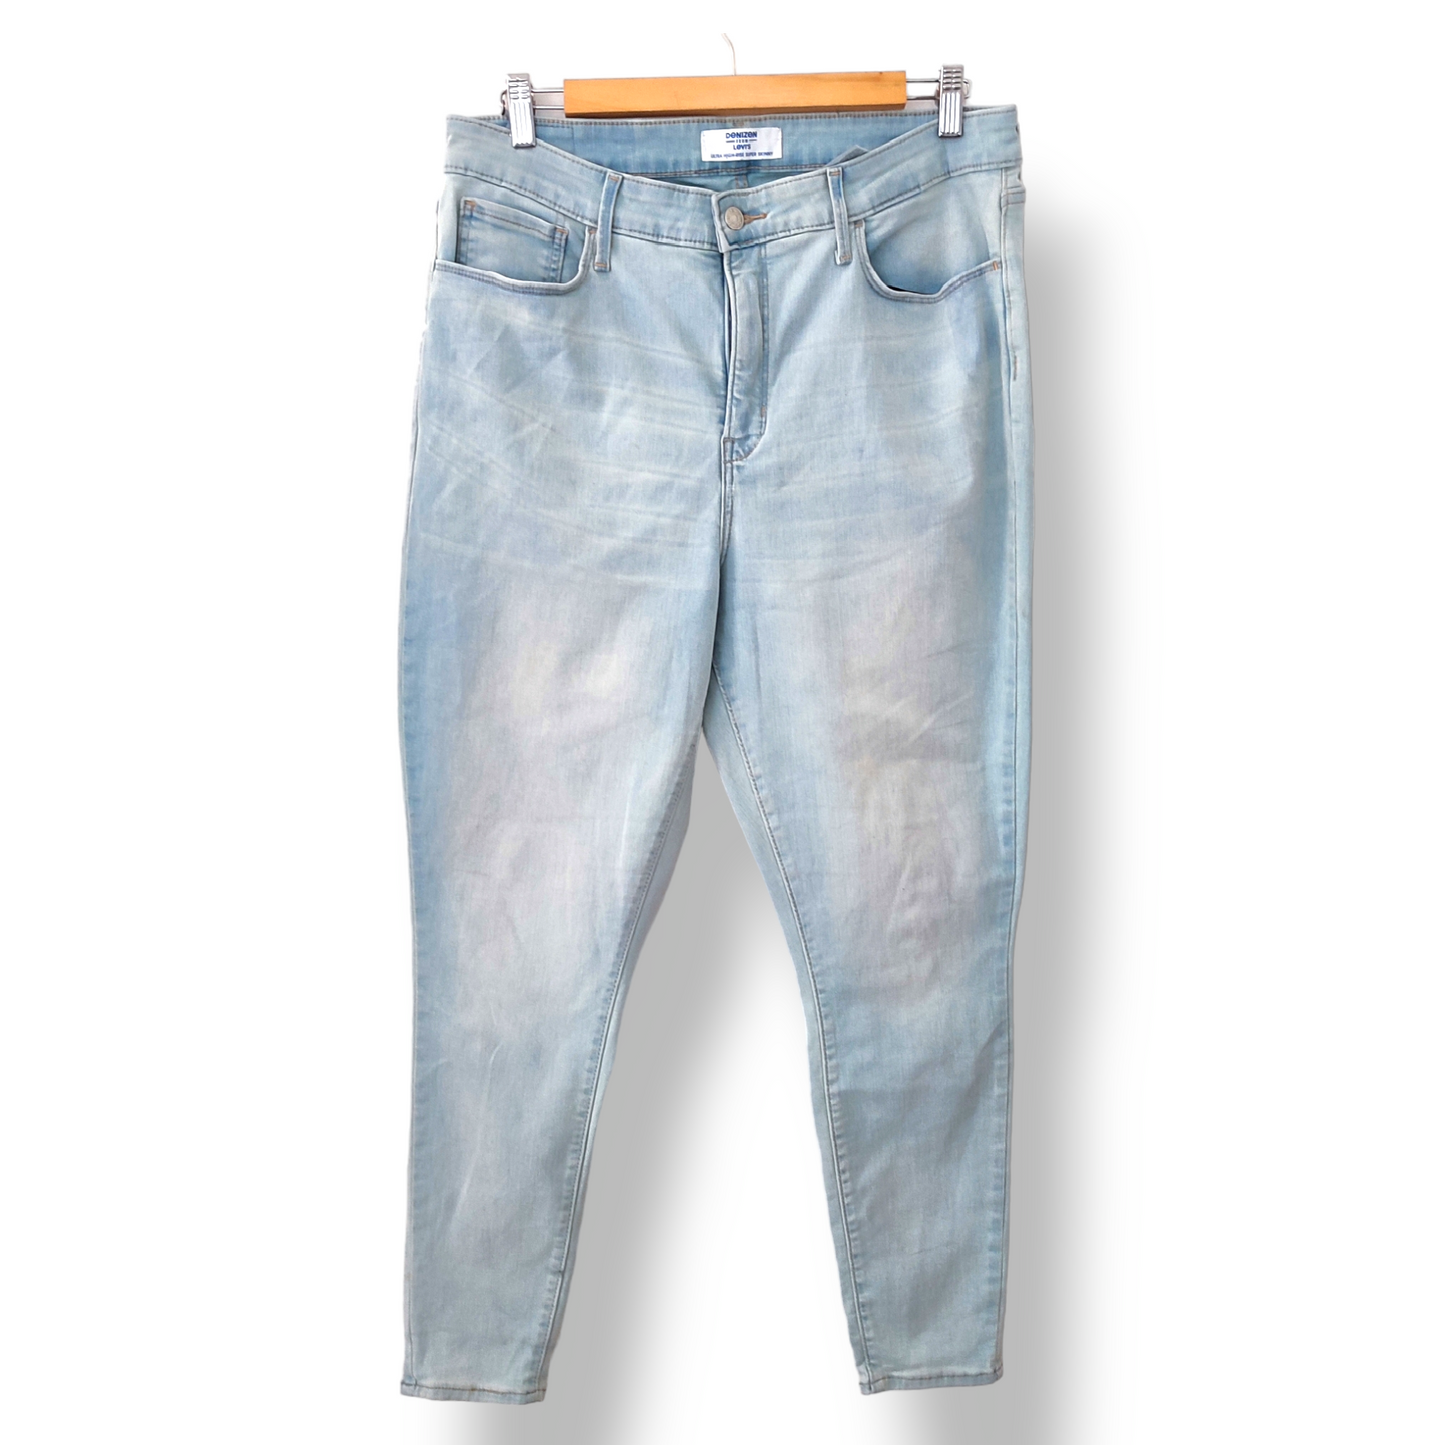 Jeans Levis Super Skinny